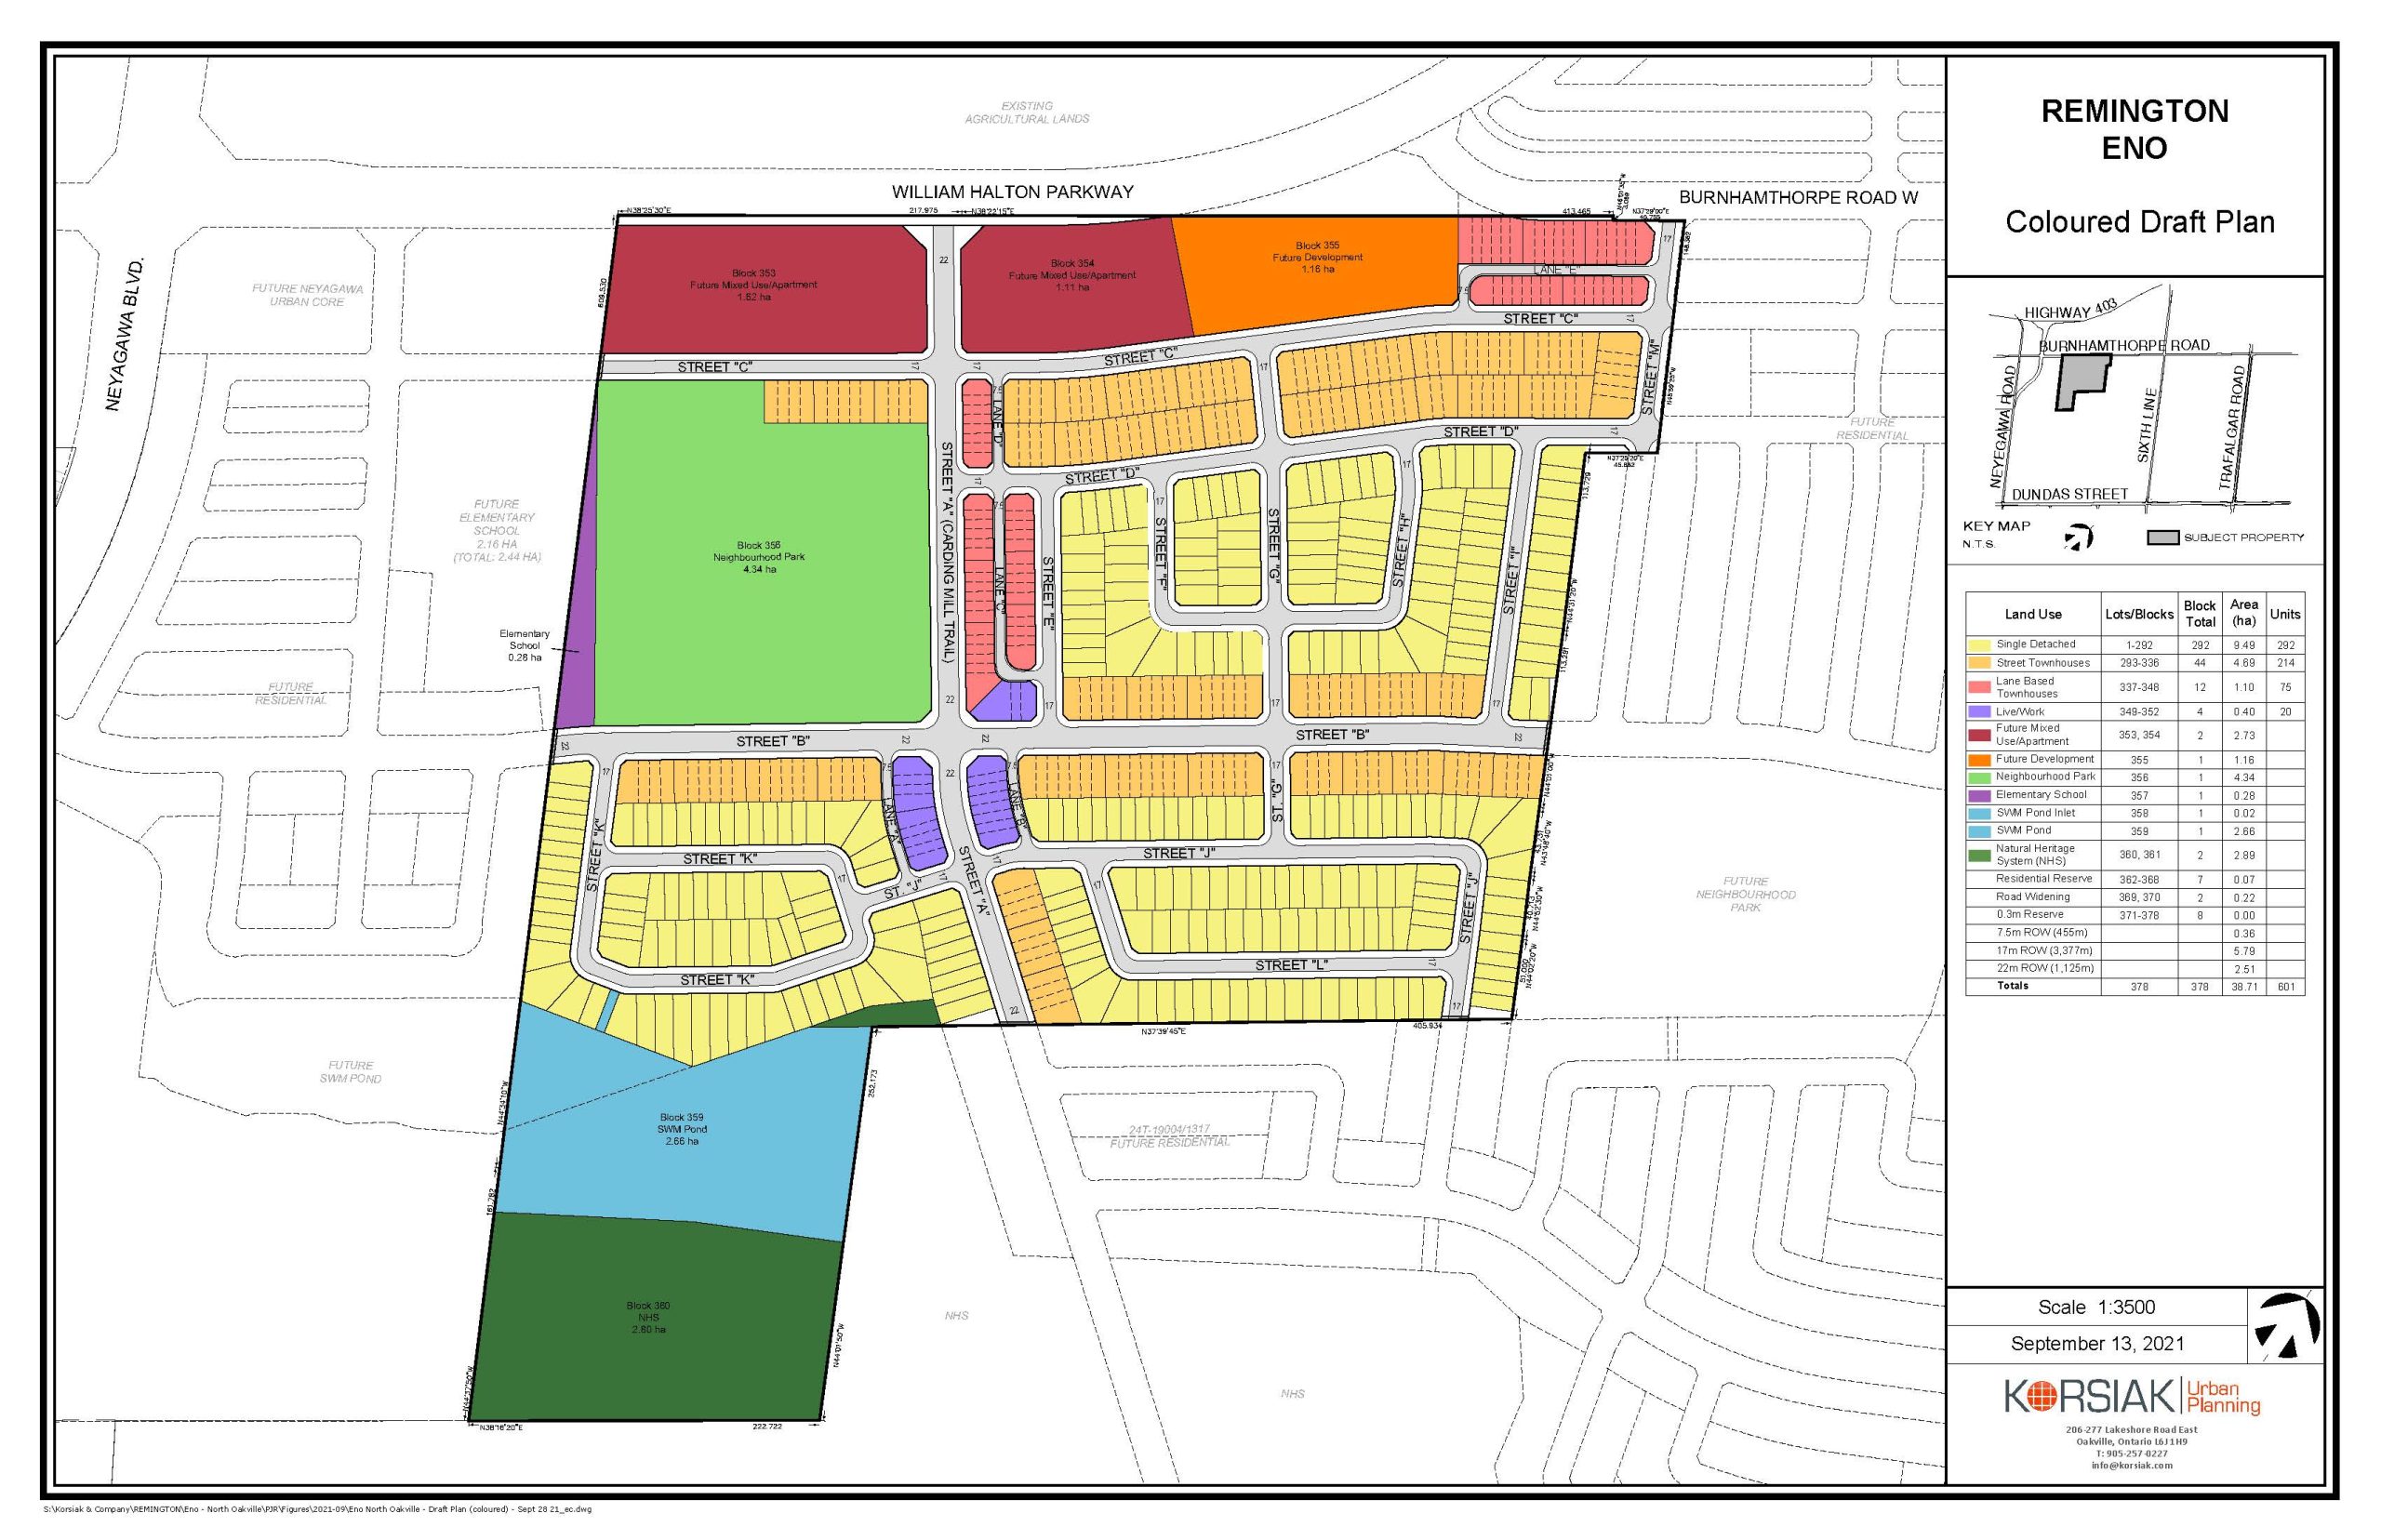 Korsiak Urban Planning - Oakville Portfolio - Burnhamthorpe Road, Greenfield Development - Oakville, Ontario